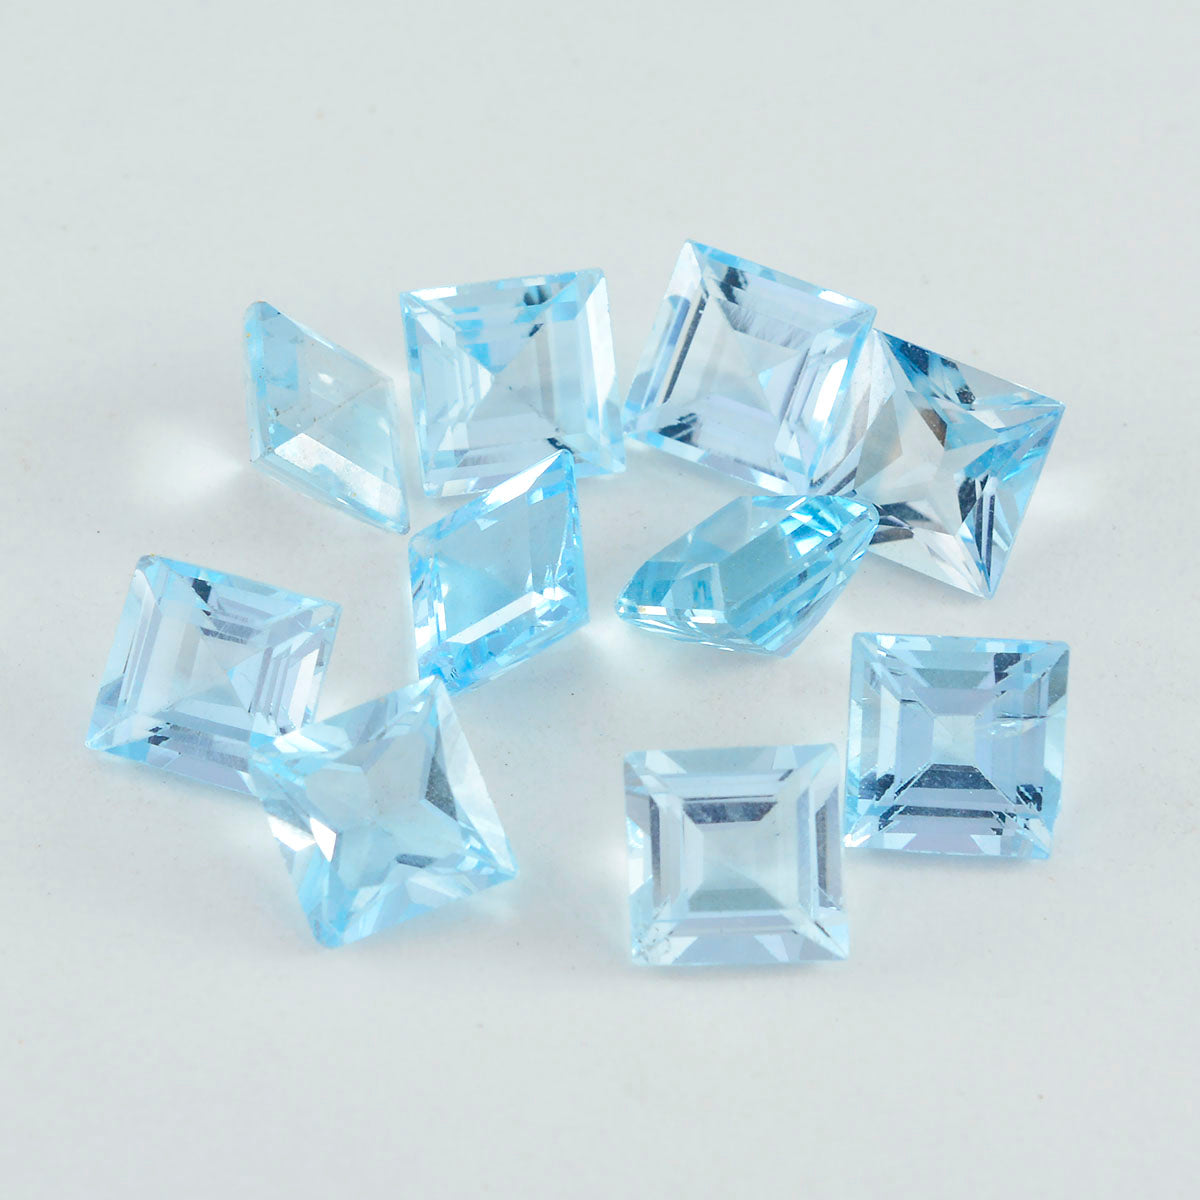 Riyogems 1PC Genuine Blue Topaz Faceted 7x7 mm Square Shape beautiful Quality Gemstone